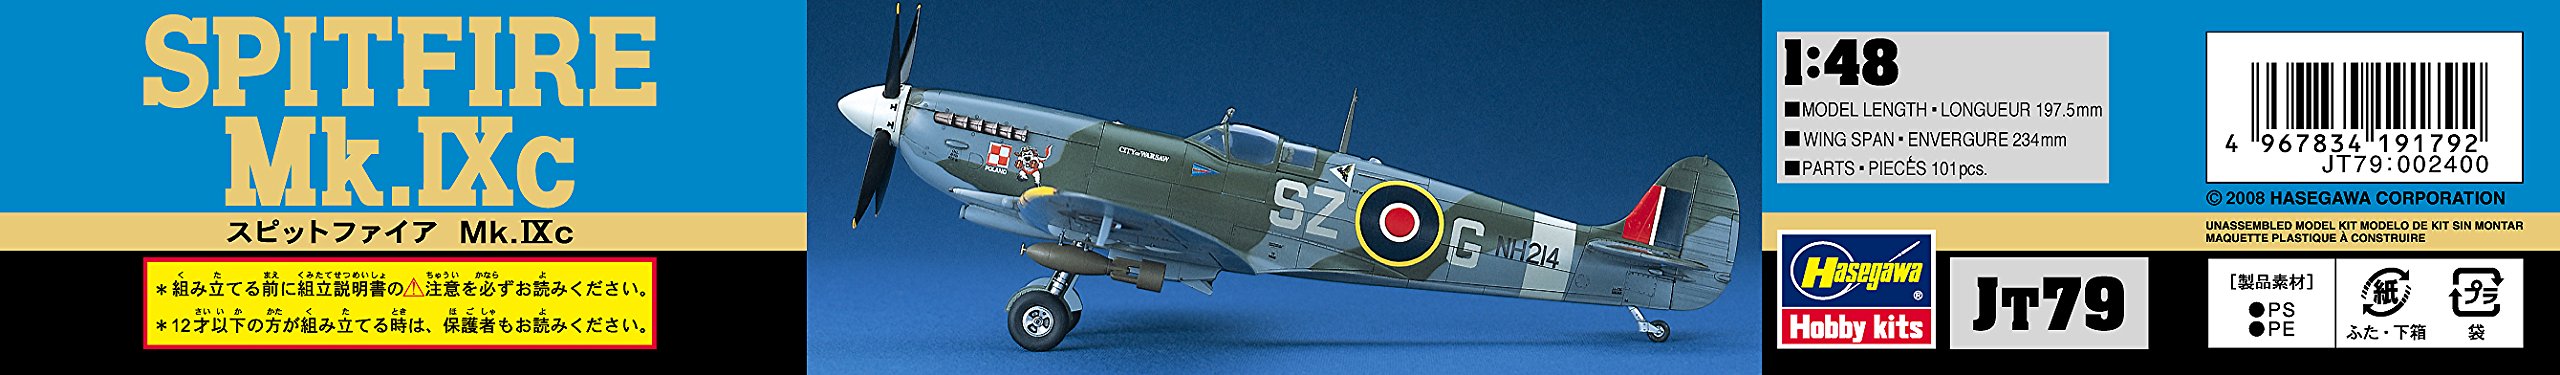 HASEGAWA Jt79 Spitfire Mk.Ix C 1/48 Scale Kit